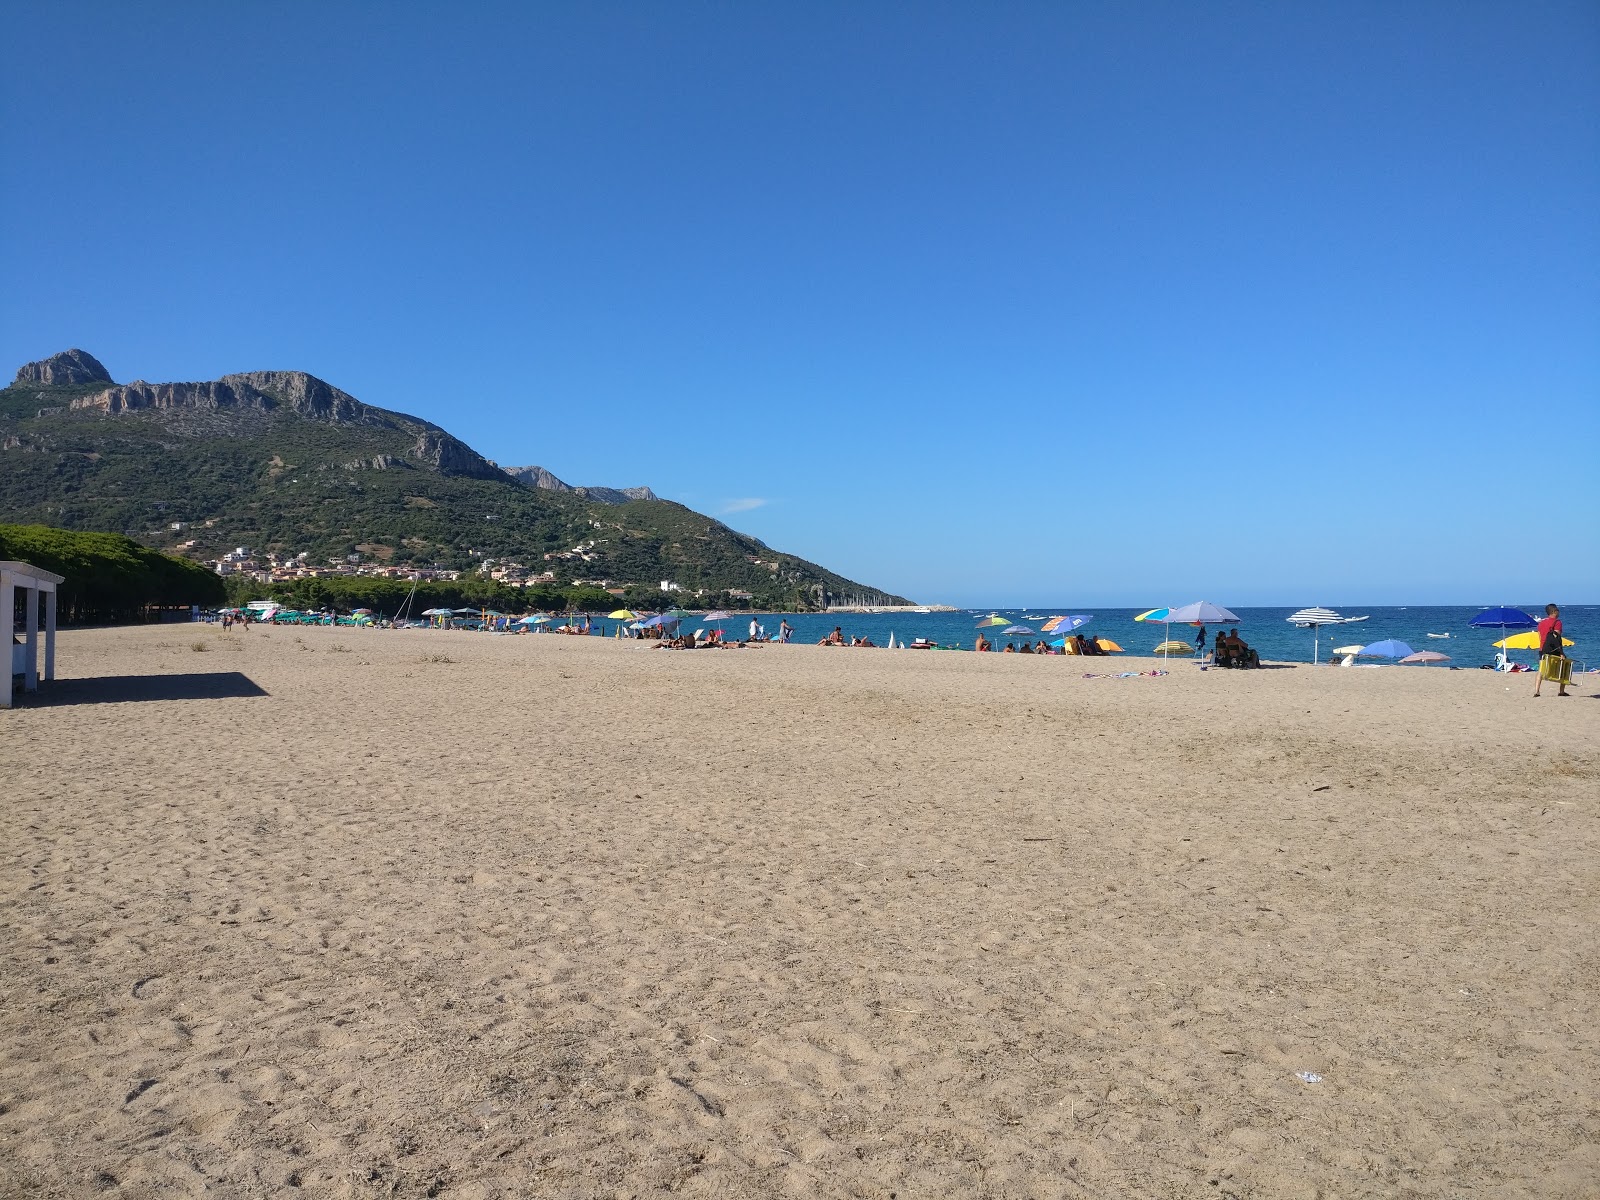 Foto de Spiaggia di Pollu II - lugar popular entre os apreciadores de relaxamento